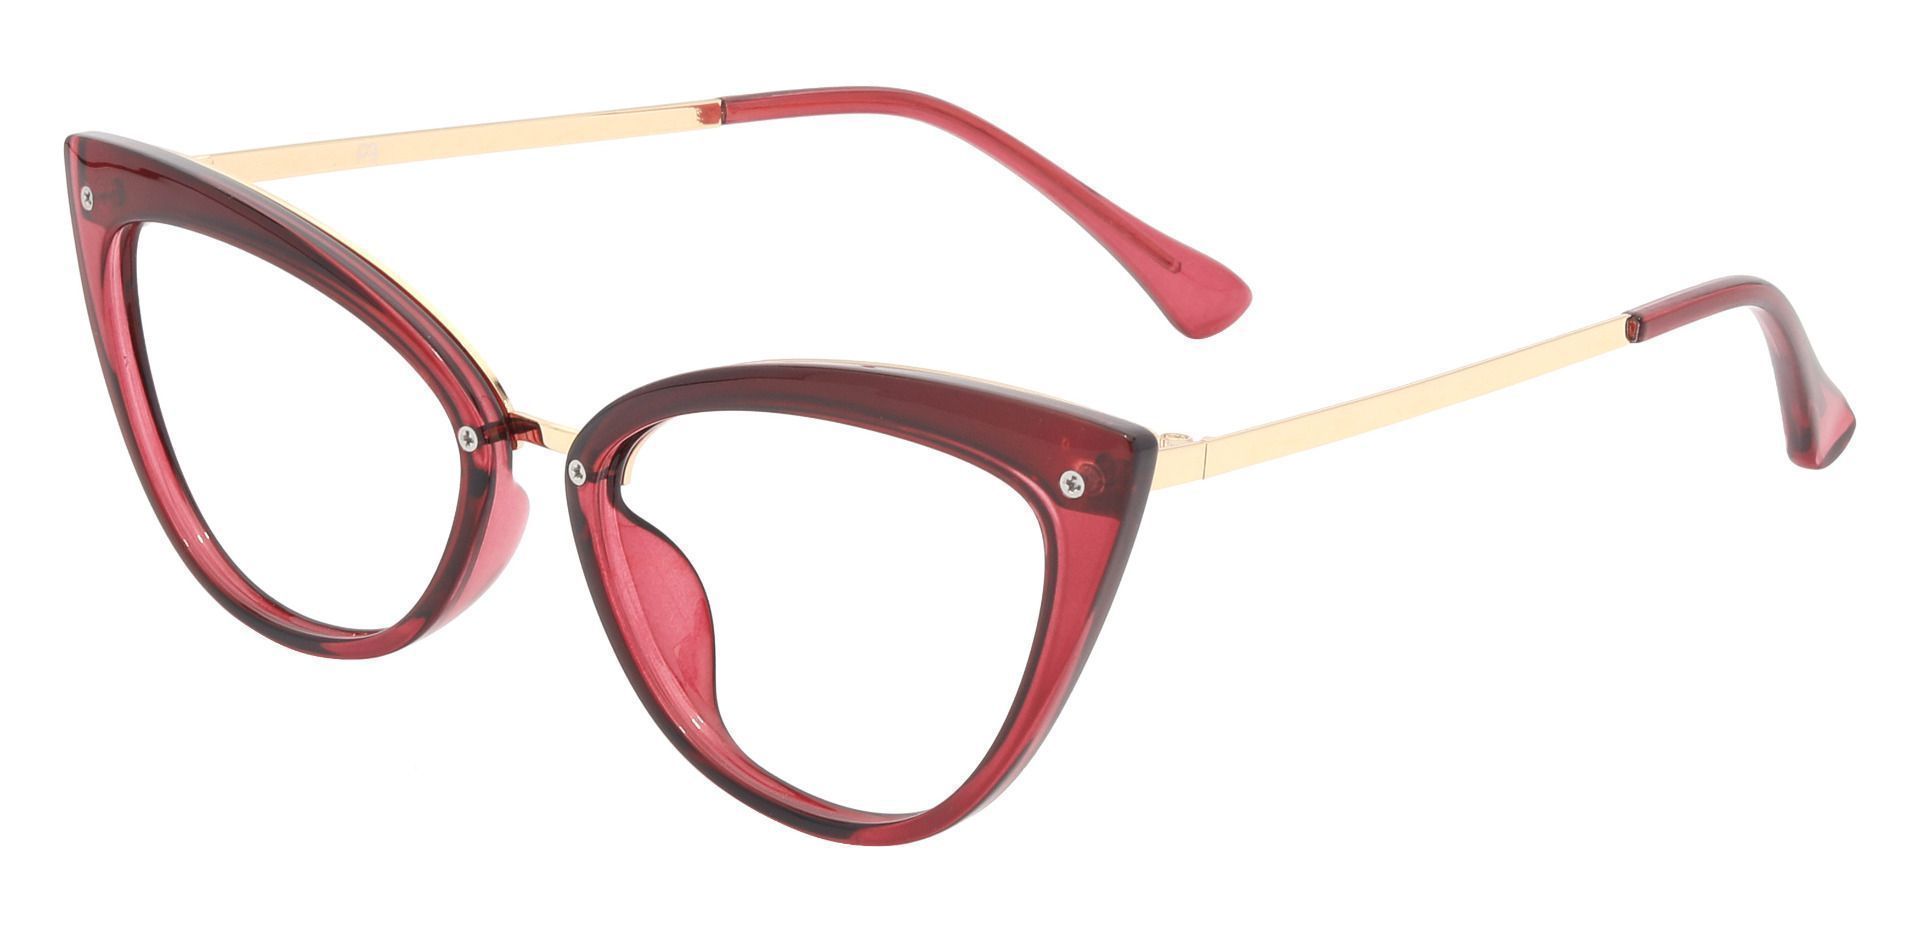 Glenda Cat Eye Prescription Glasses - Red